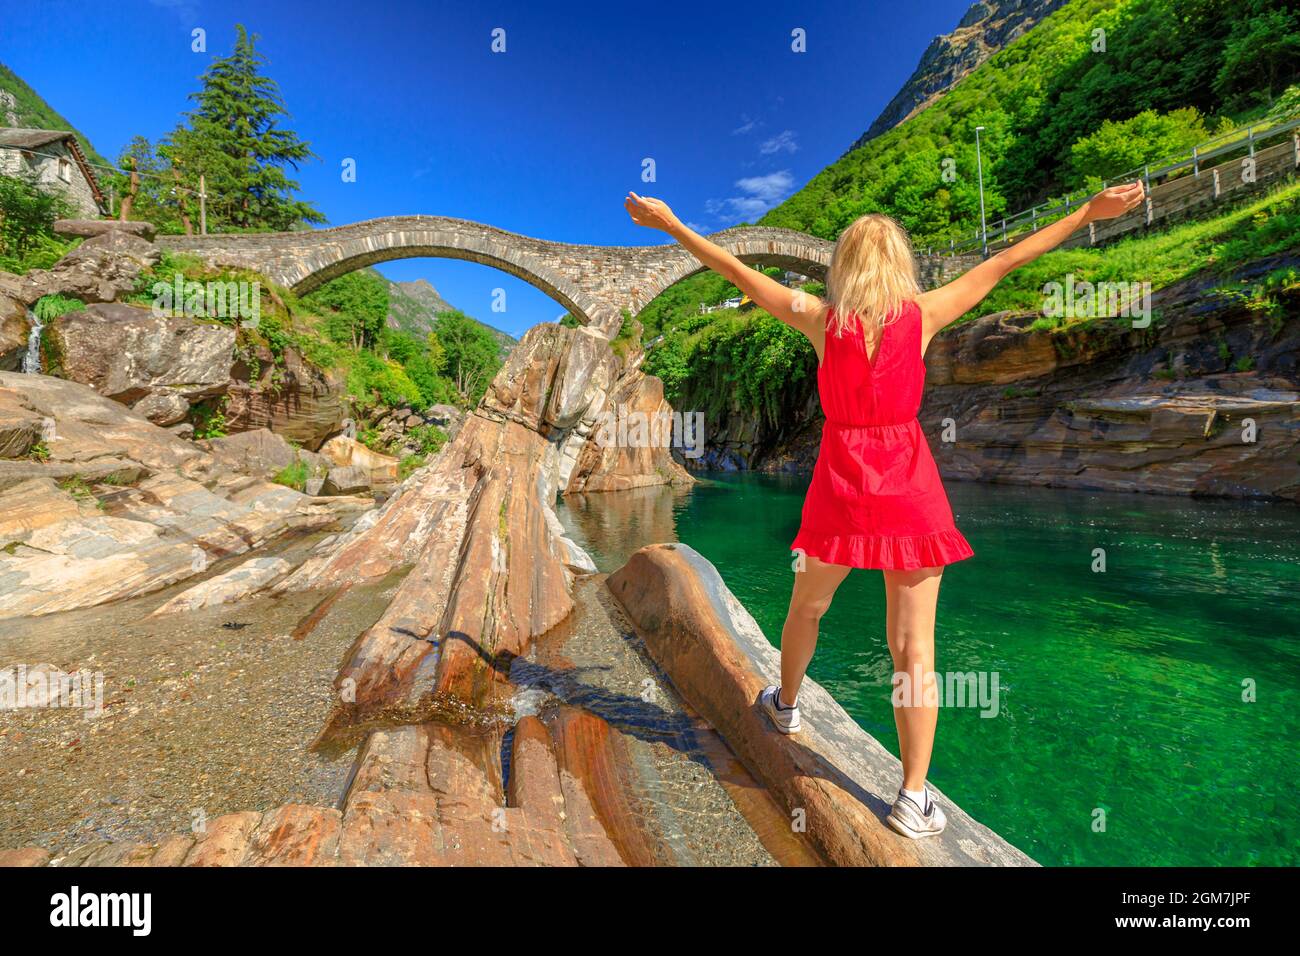 Woman by Roman stone bridge: Ponte dei Salti over Verzasca River. Verzasca valley by Lavertezzo town. Famous landmark for riverside leisure and high Stock Photo